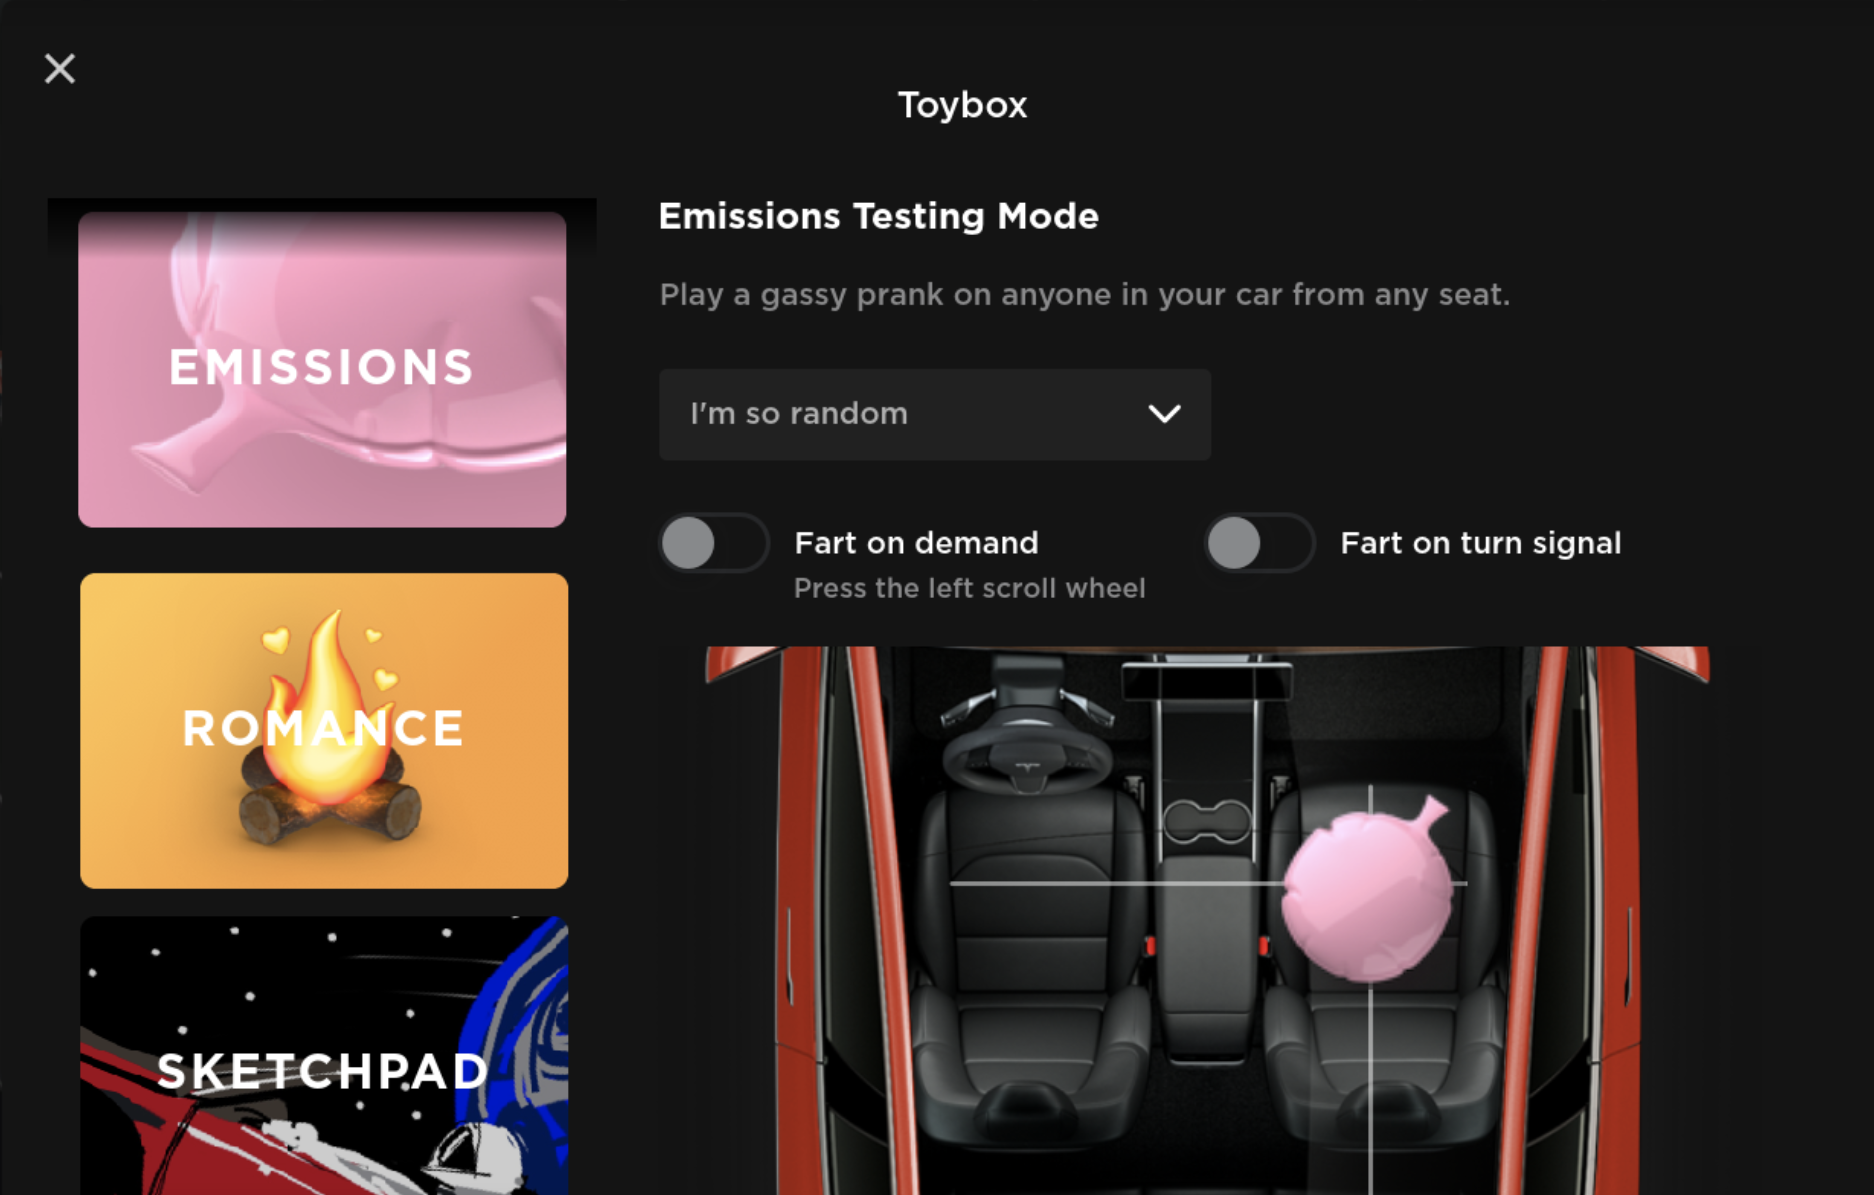 Tesla Tesla Toybox feature in update 2020.16.2